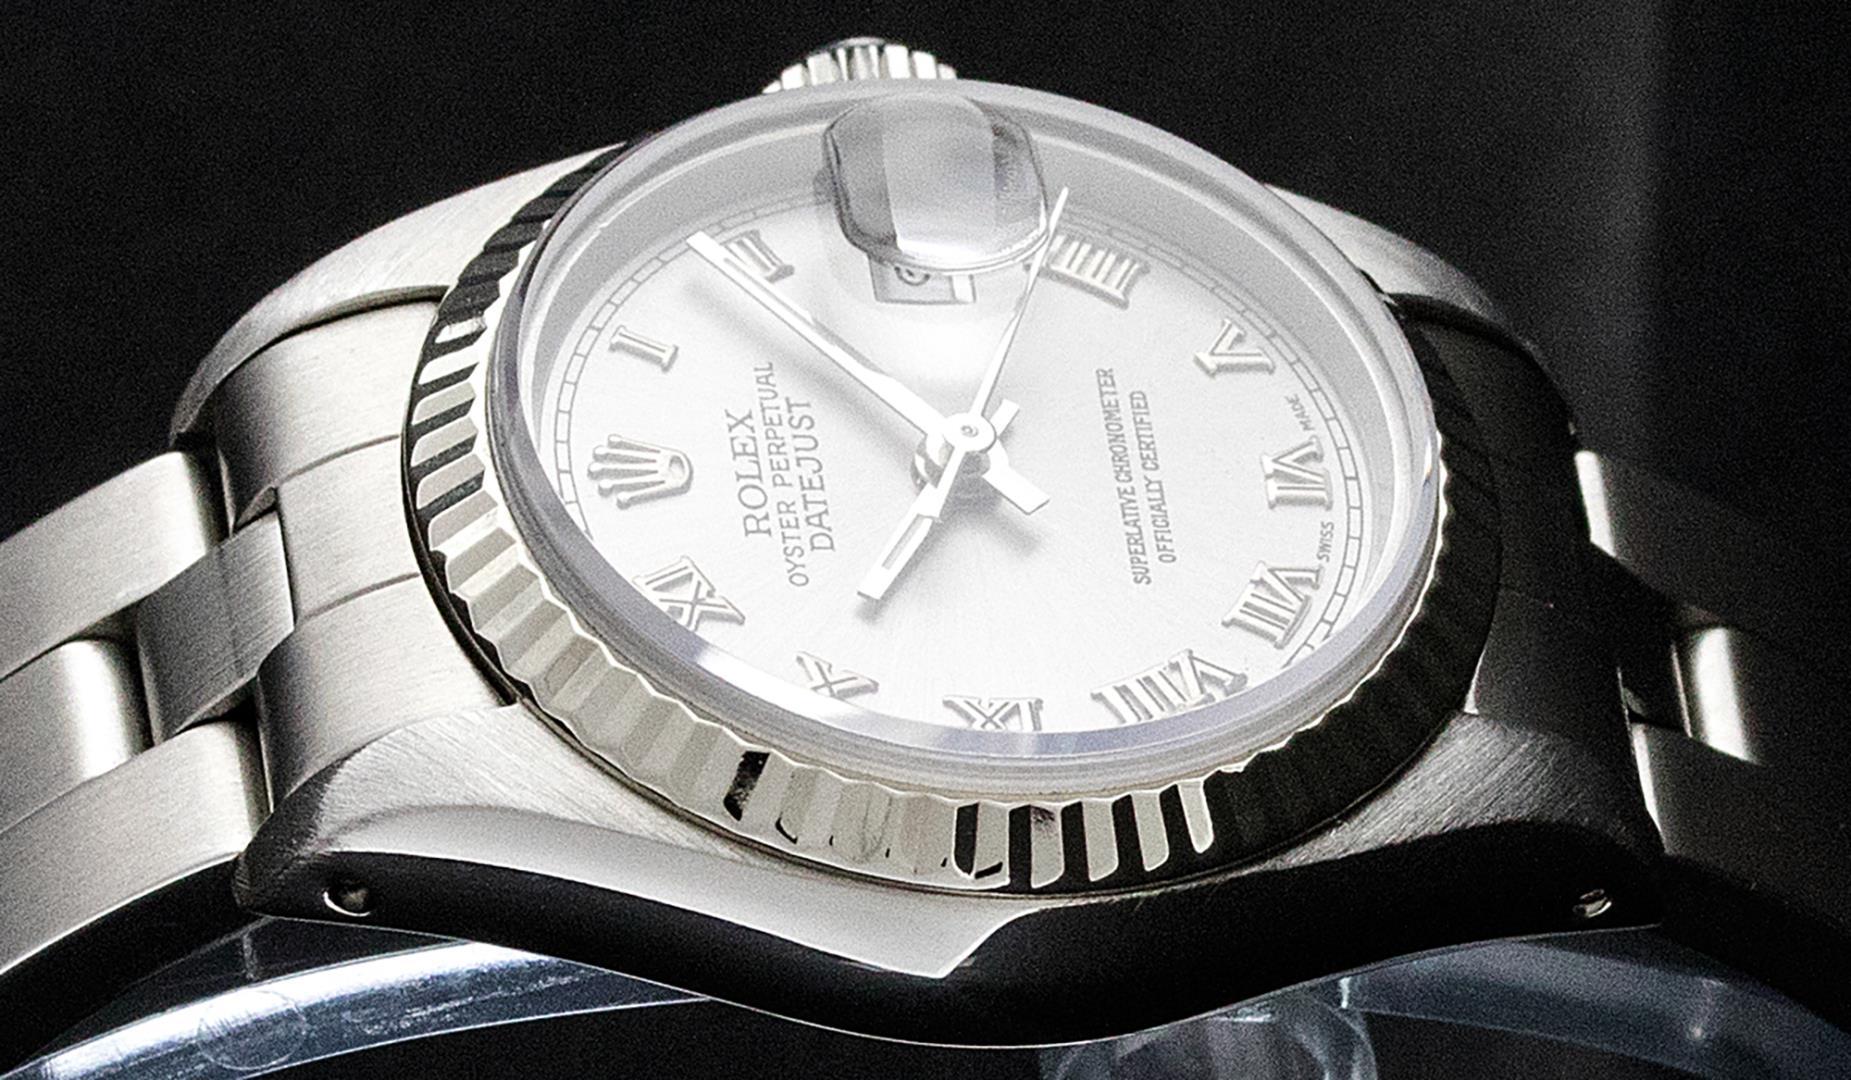 Rolex Ladies Stainless Steel Slate Grey Datejust Wristwatch